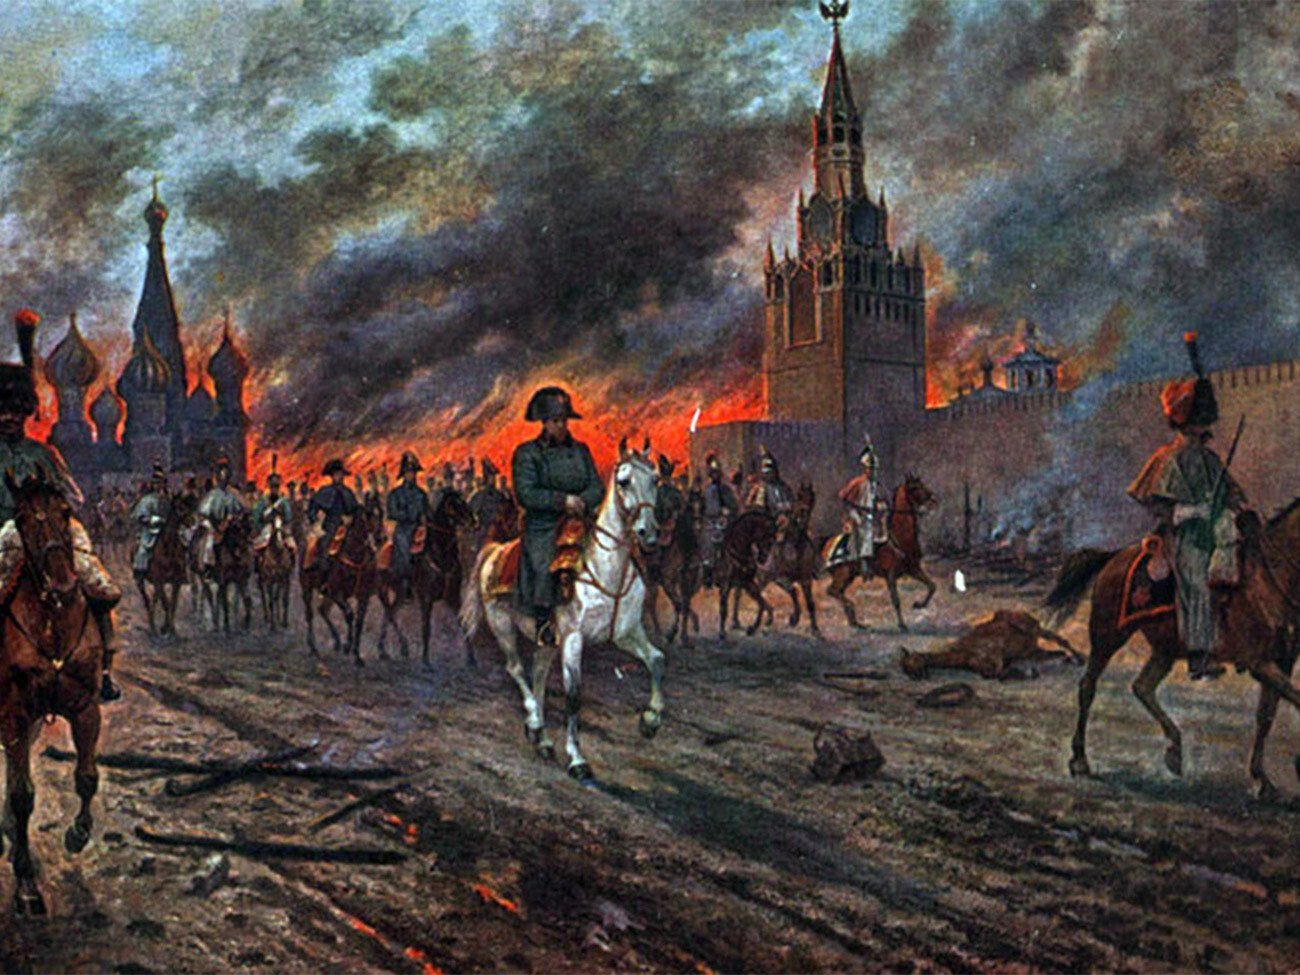 L'incendio di Mosca

